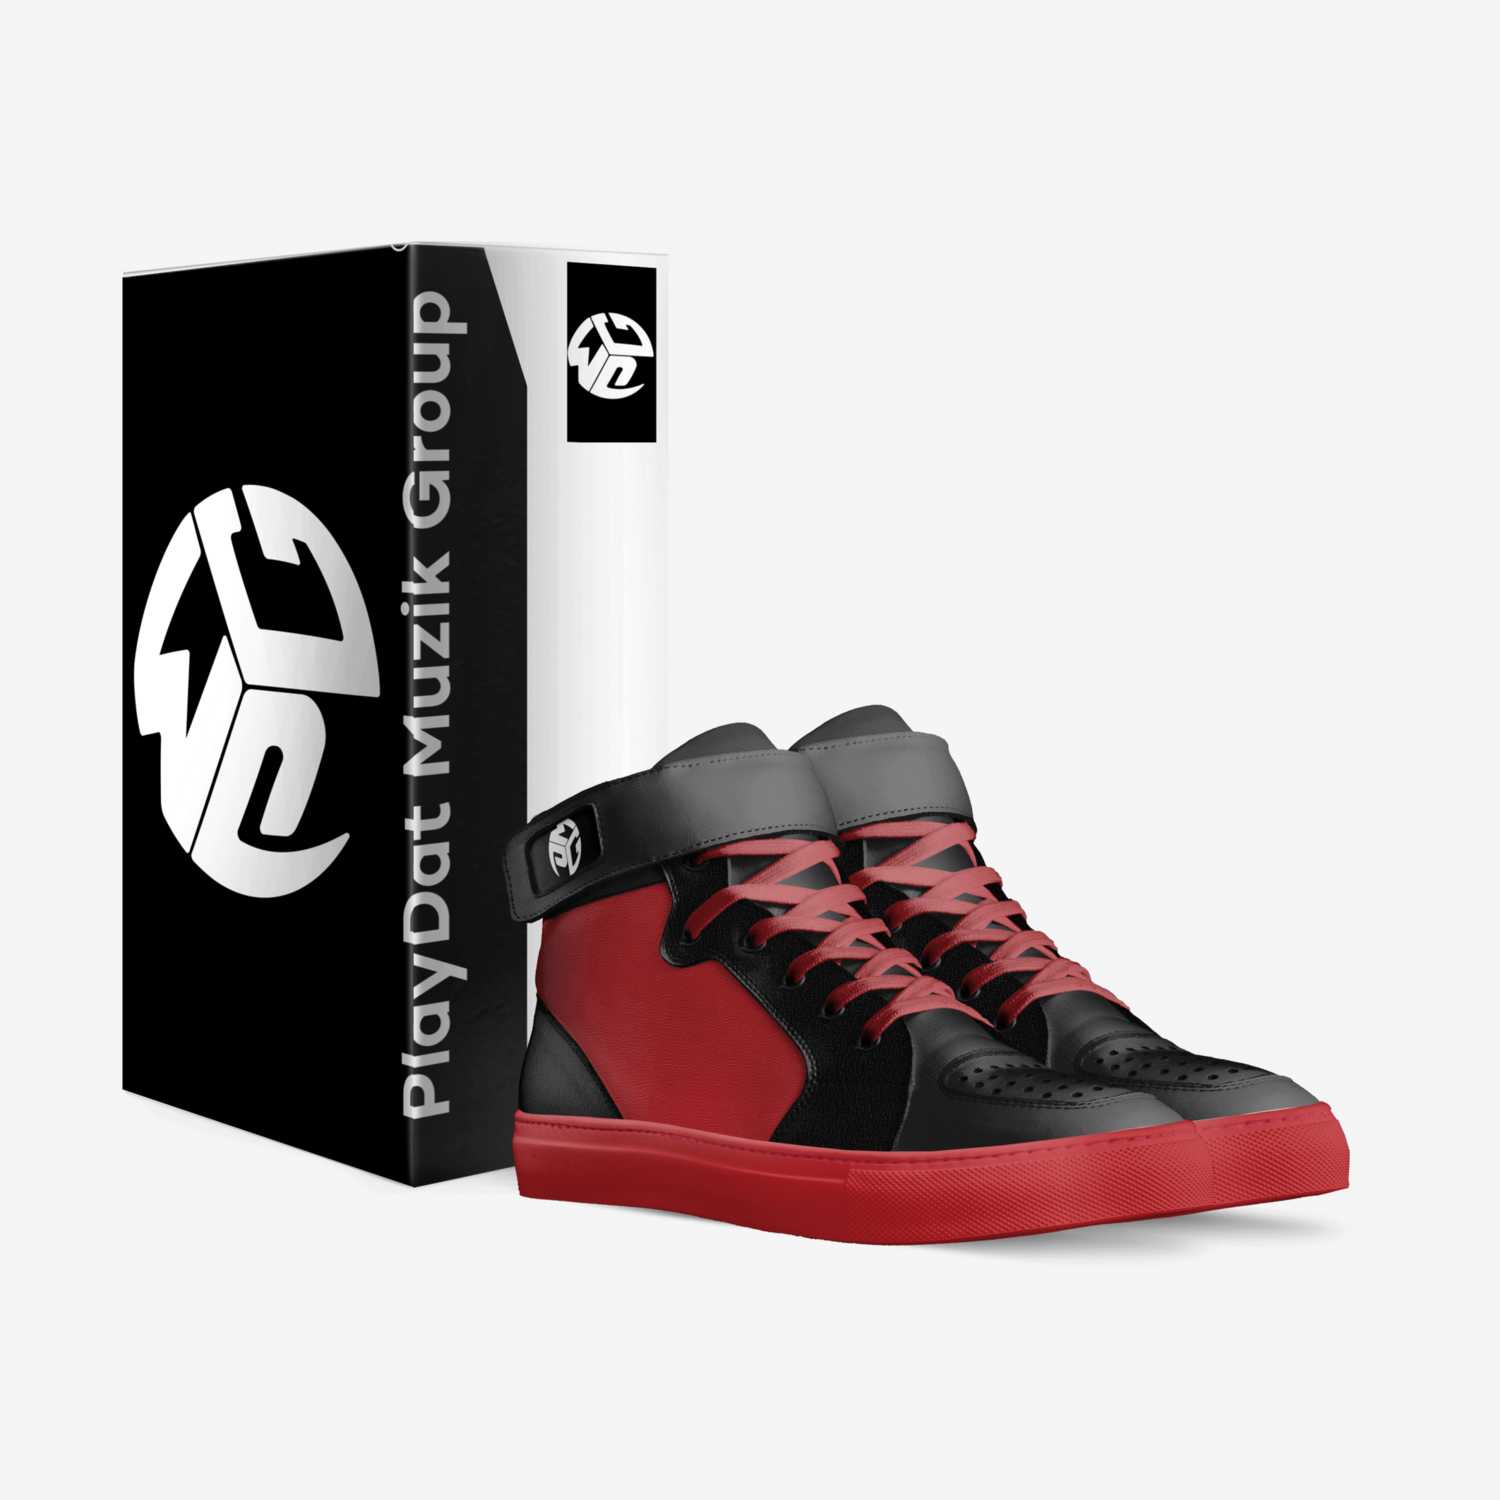 Sean Christian custom made in Italy shoes by David Wynn | Box view